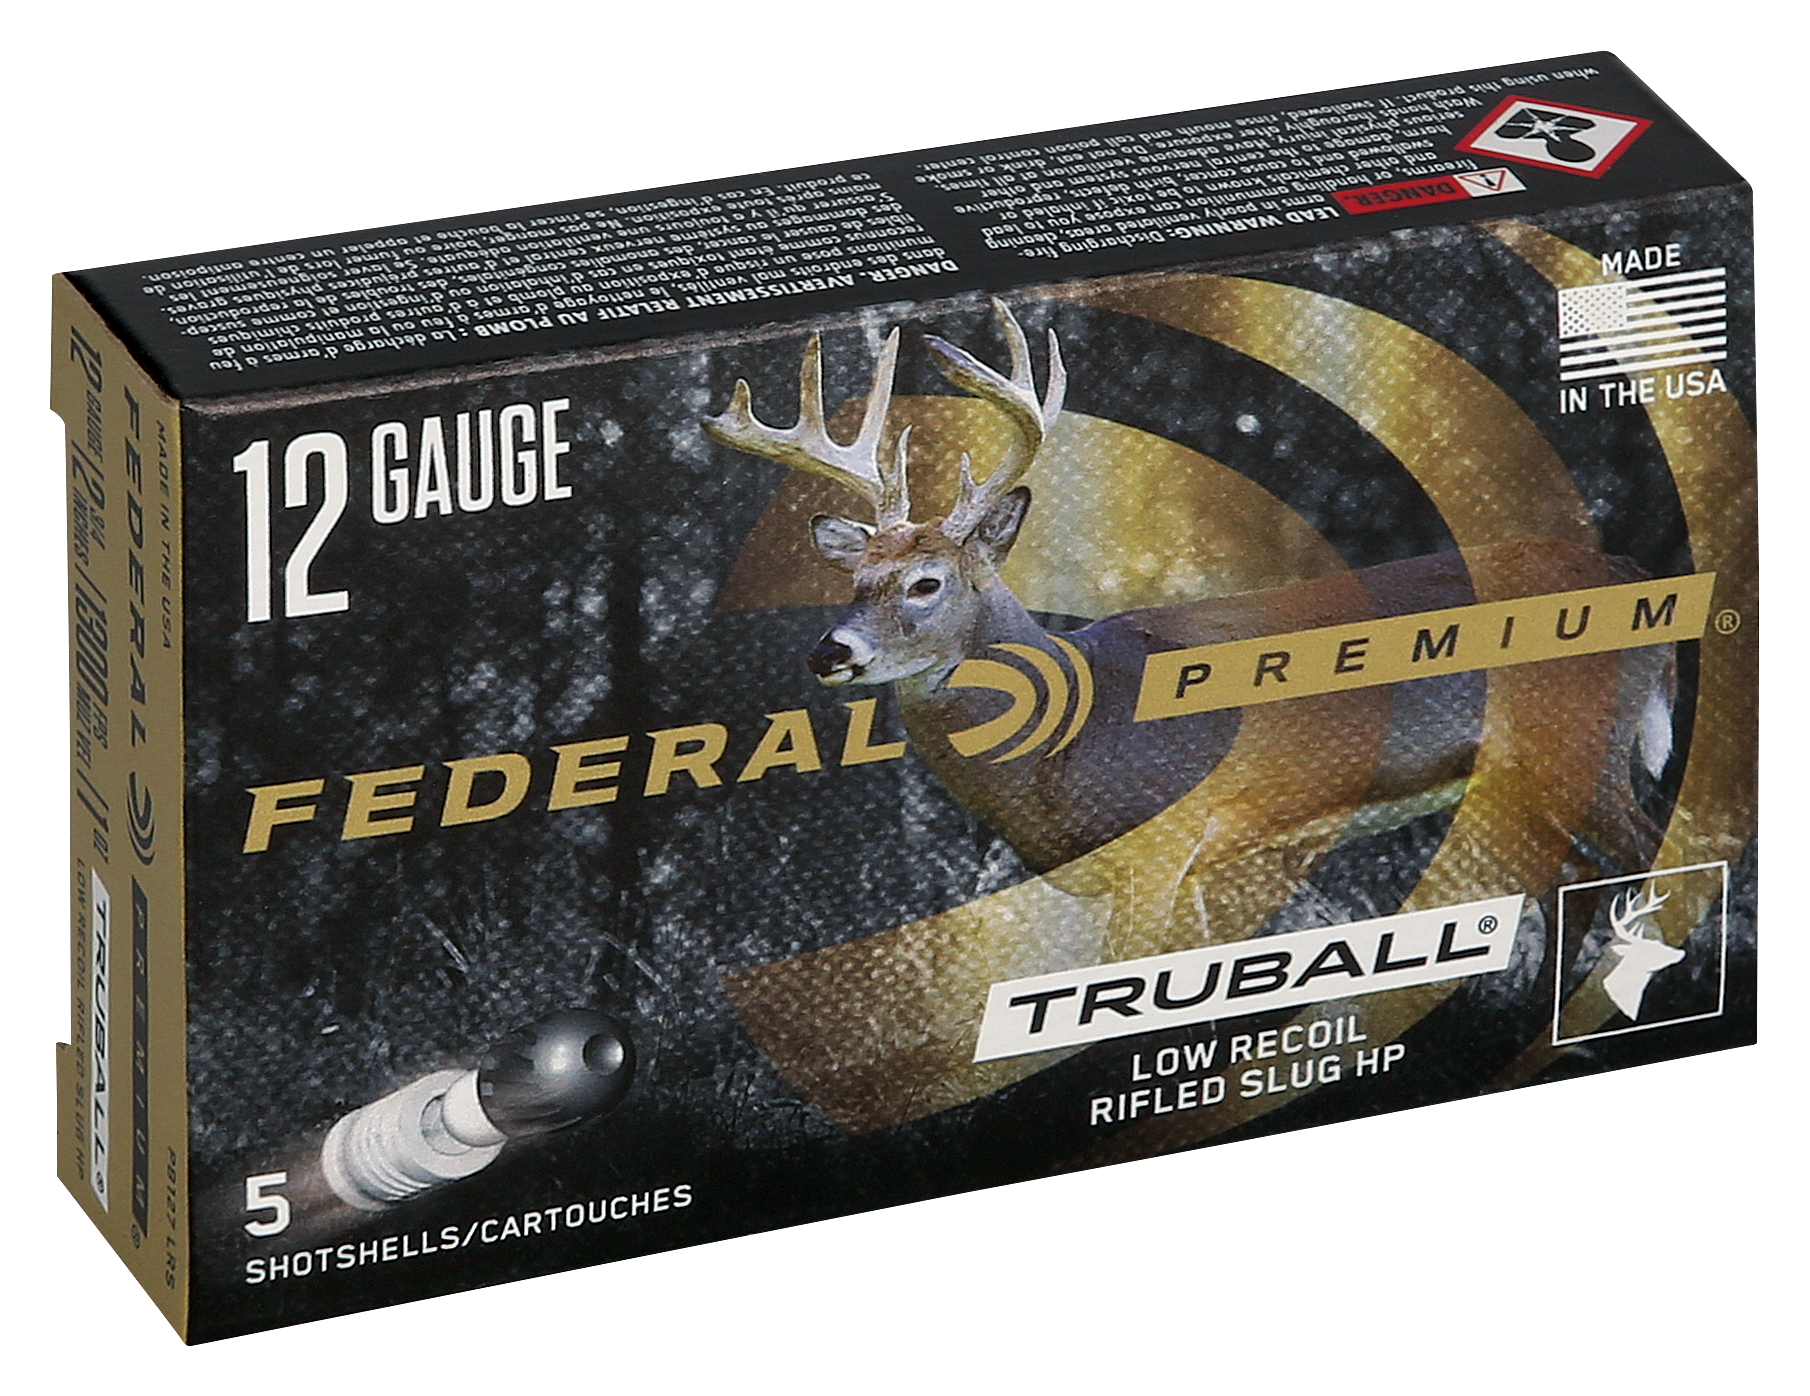 12 gauge shotgun shell slug or cartridge Cut Out Stock Images